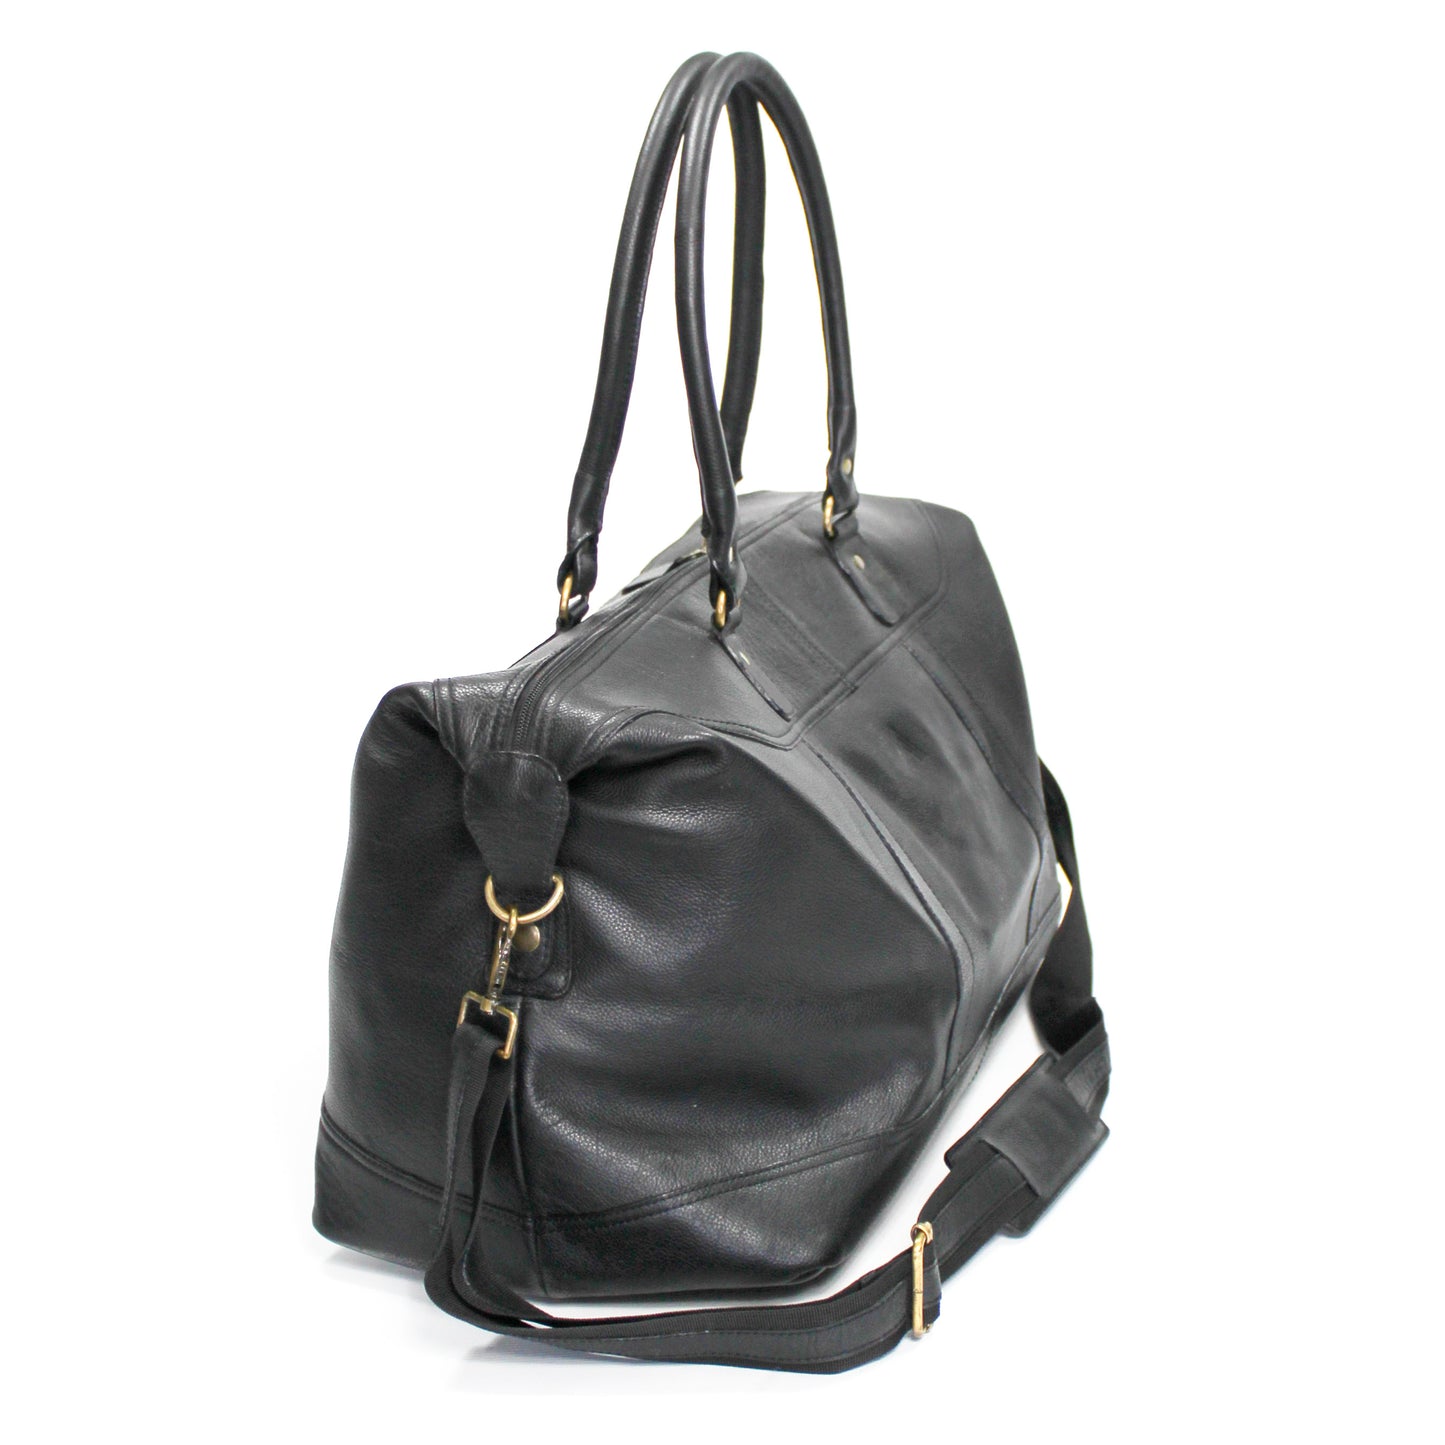 Pebbled Black Leather Travel Bag